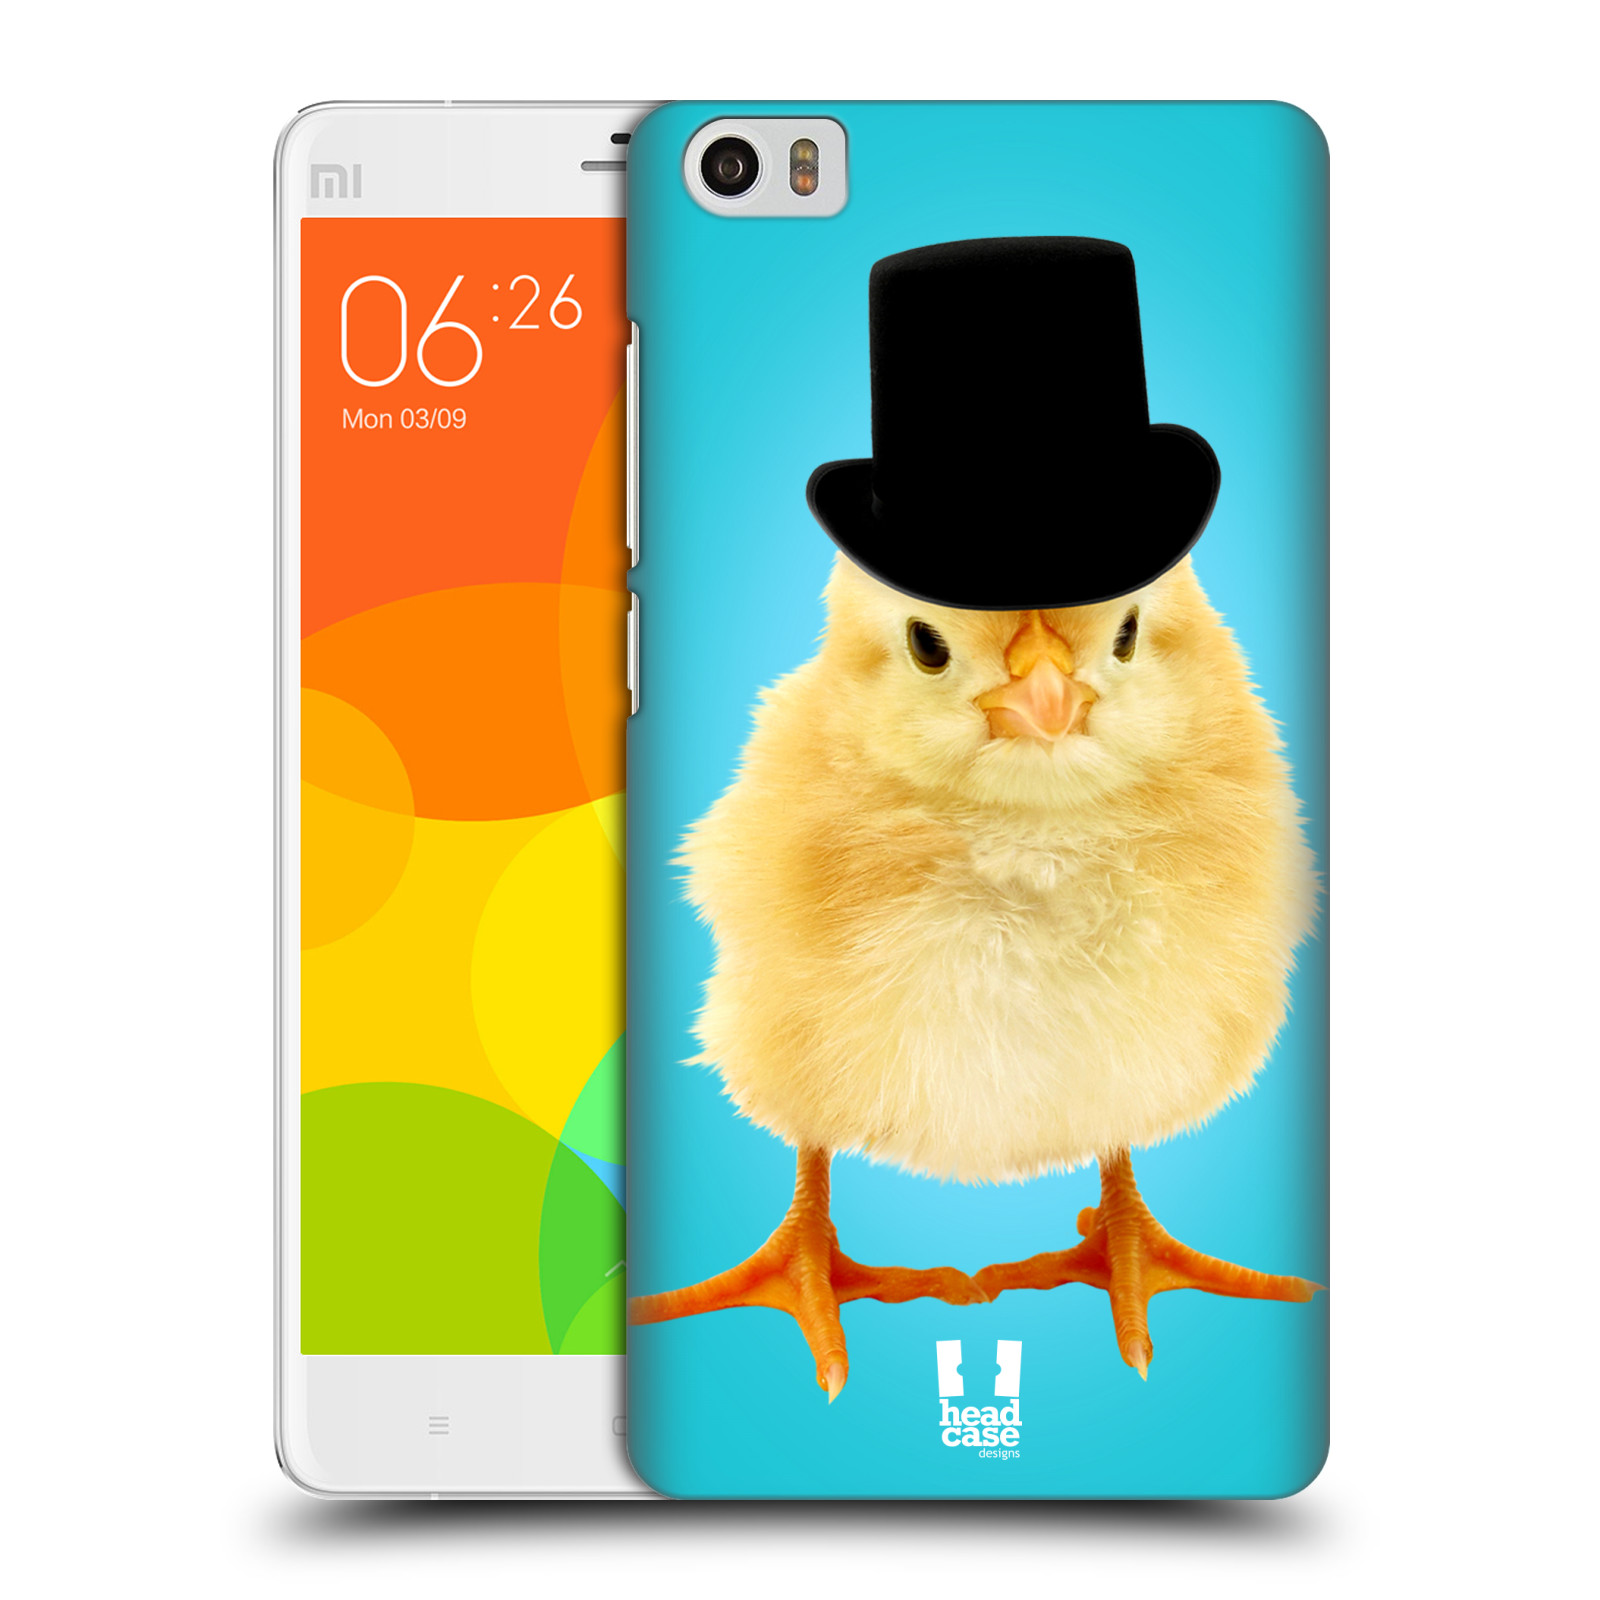 HEAD CASE pevný plastový obal na mobil XIAOMI Mi Note vzor Legrační zvířátka Mr. kuřátko